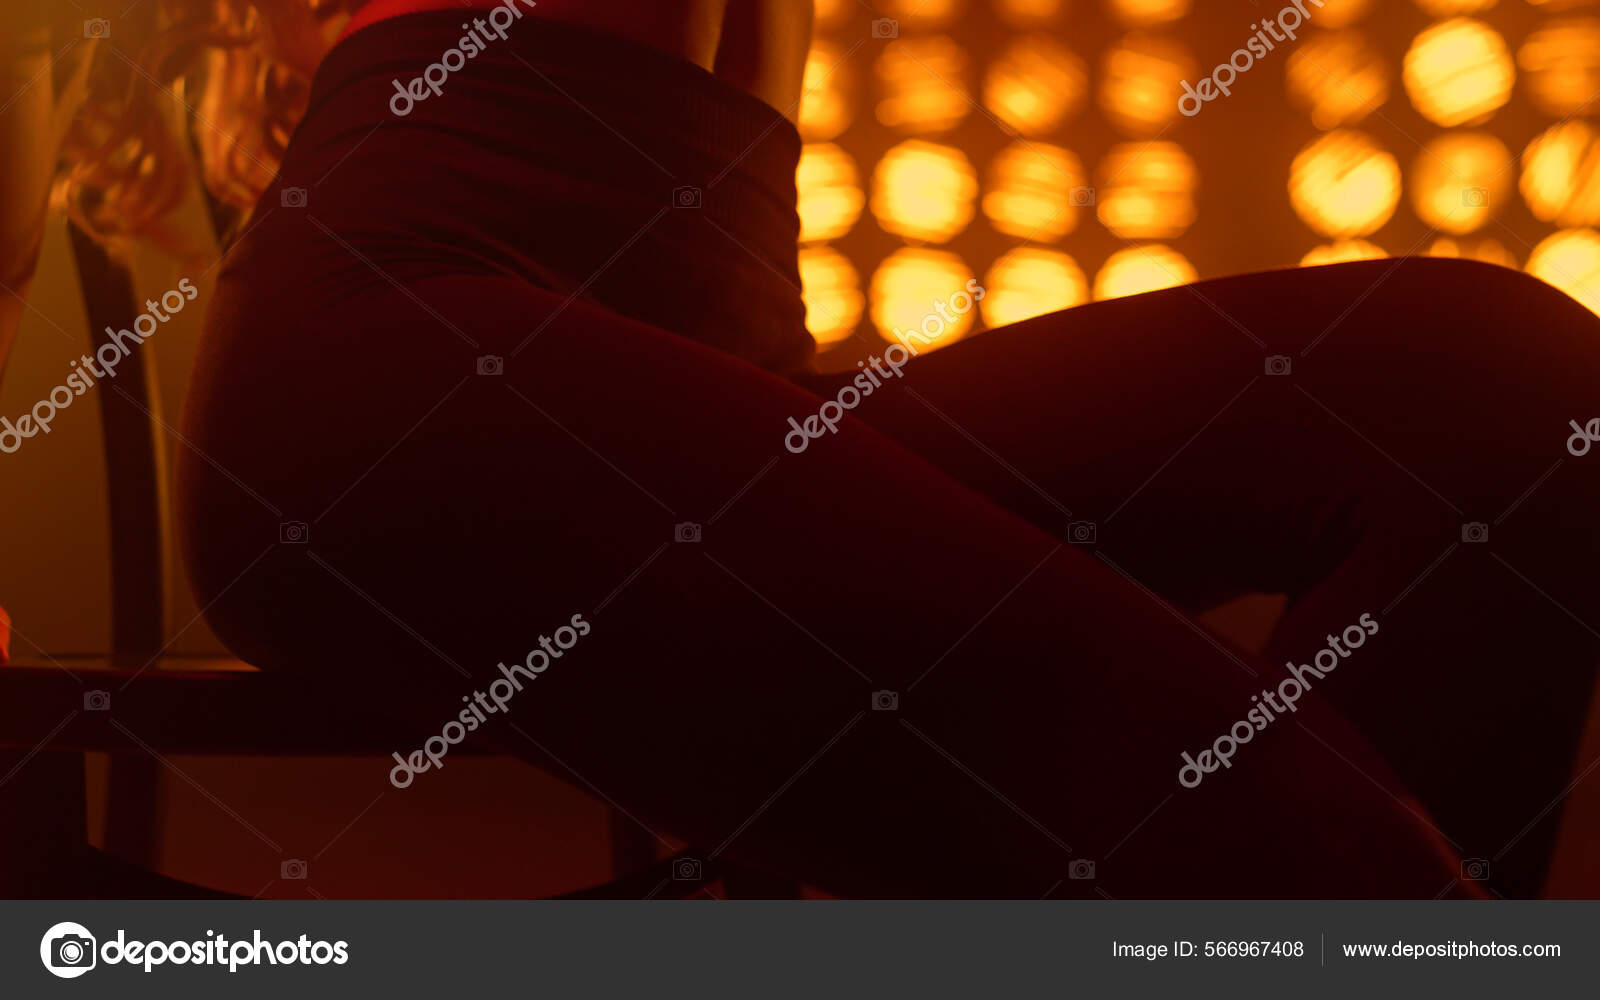 Slim woman legs making sexual movements on nightclub spotlights close up